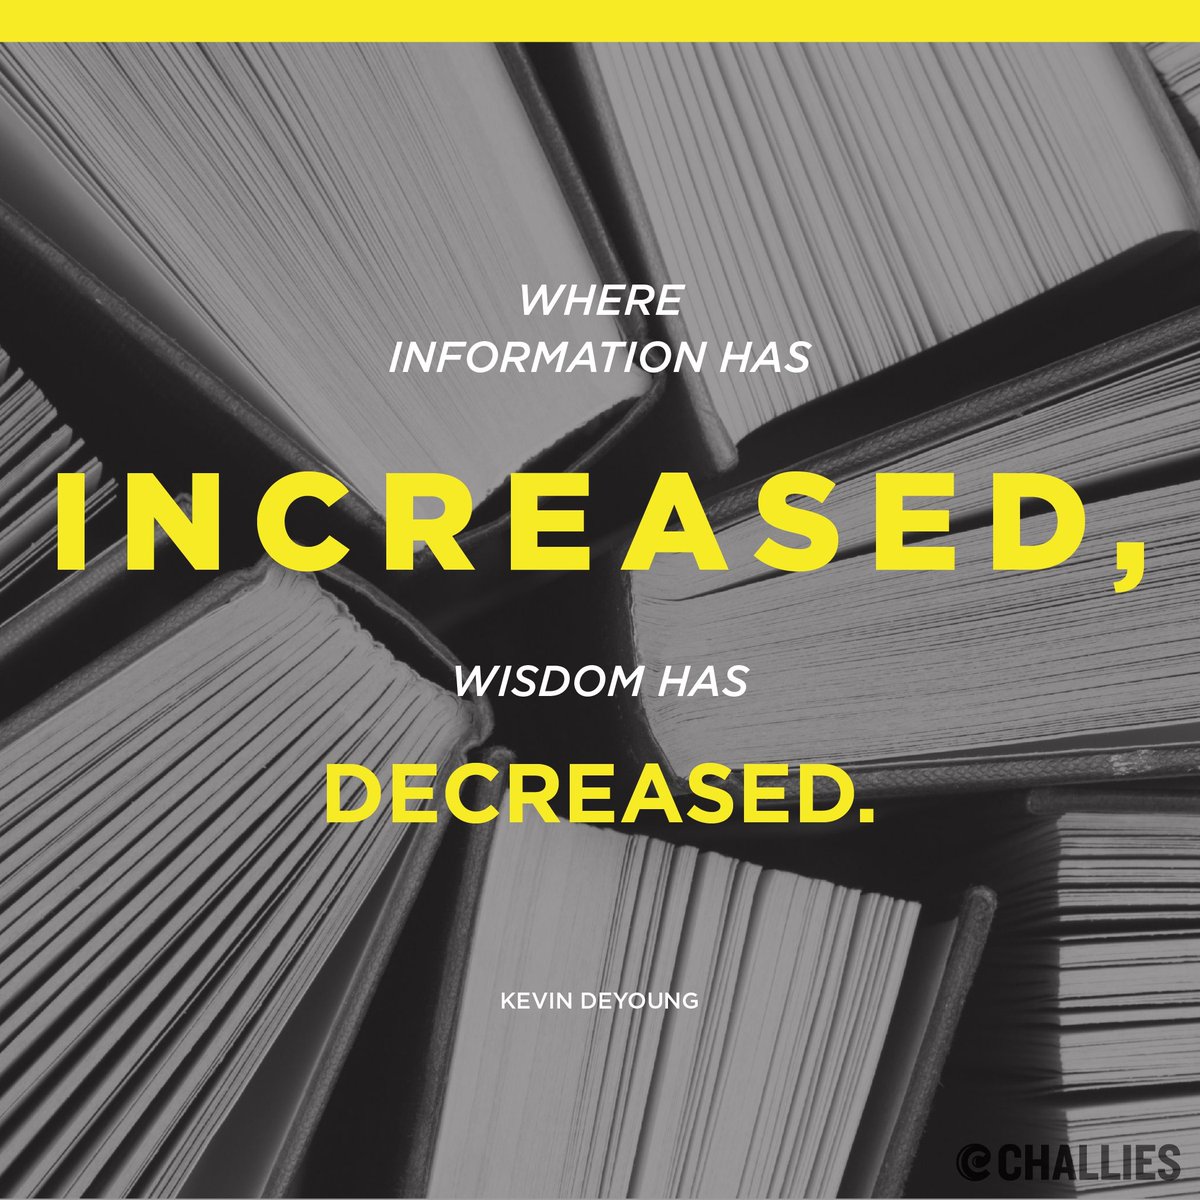 'Where information has increased, wisdom has decreased.' (Kevin DeYoung)